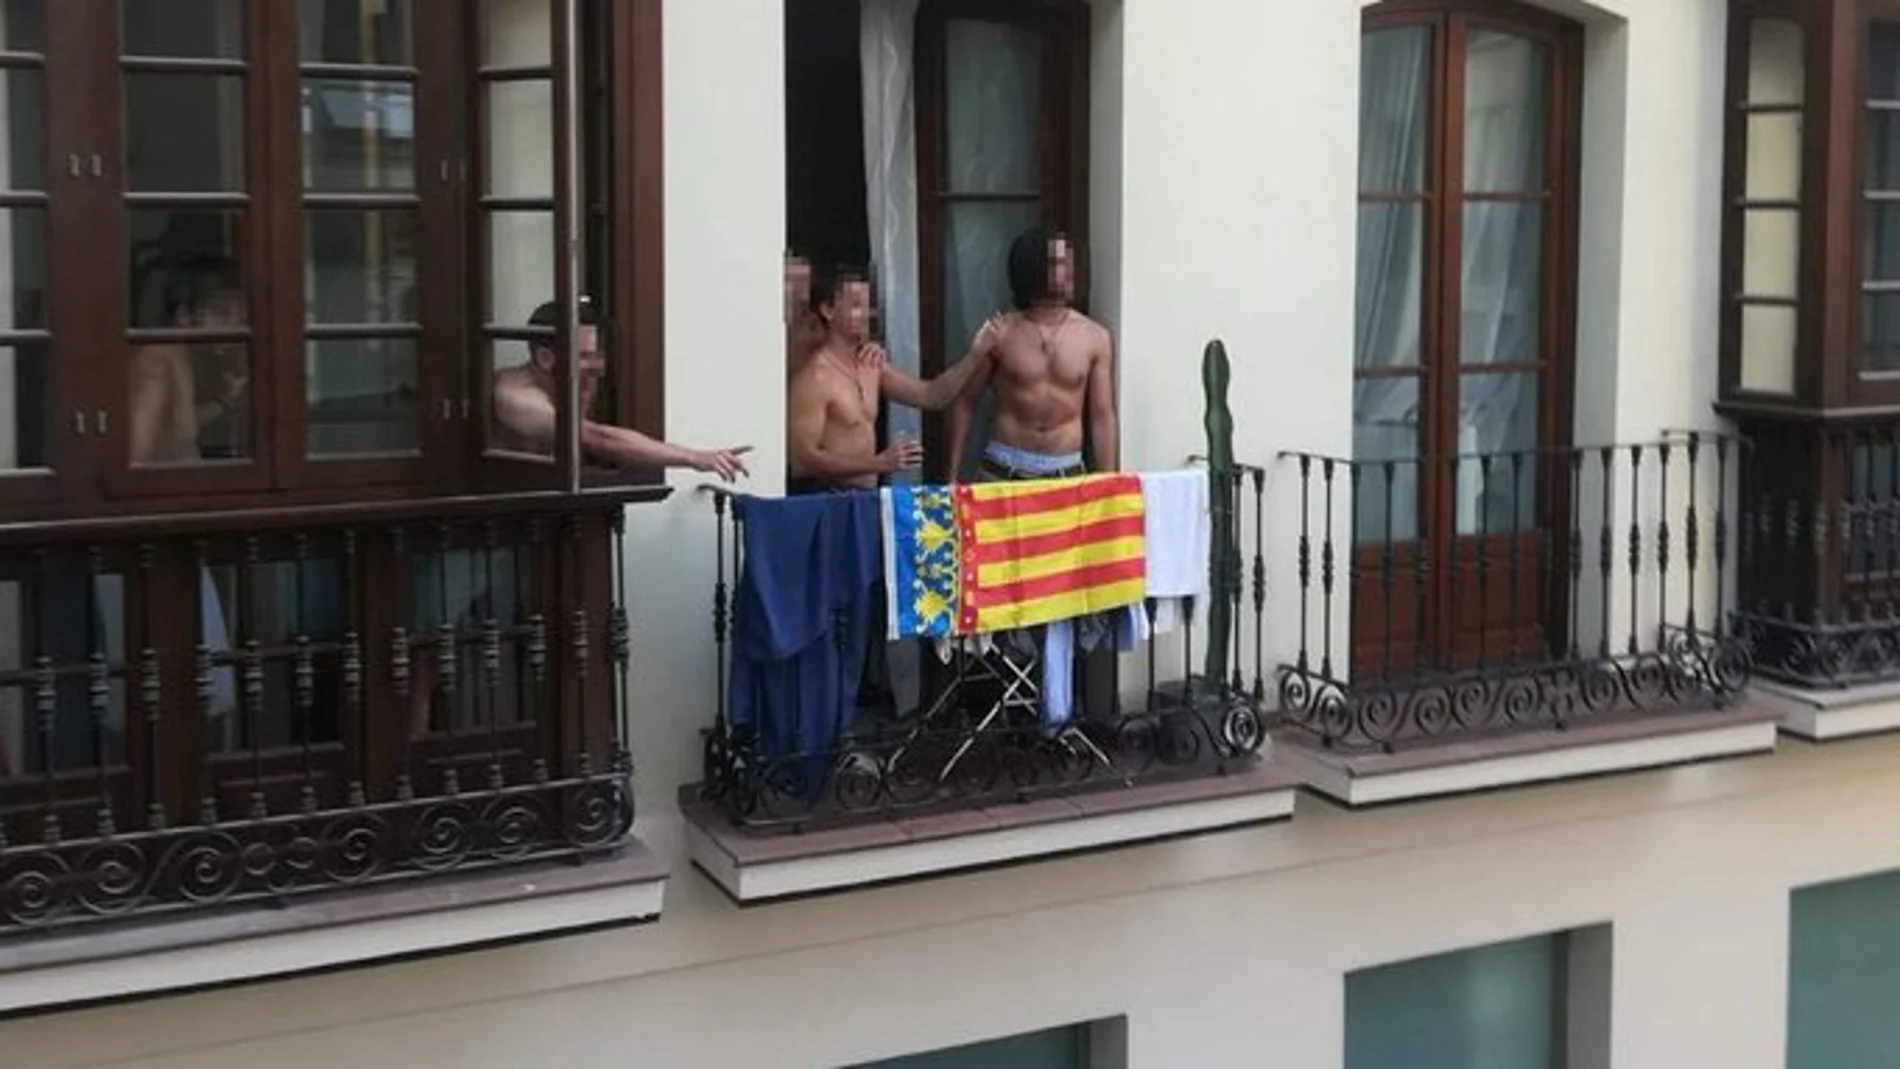 La bandera por la que se inició la disputa en Málaga